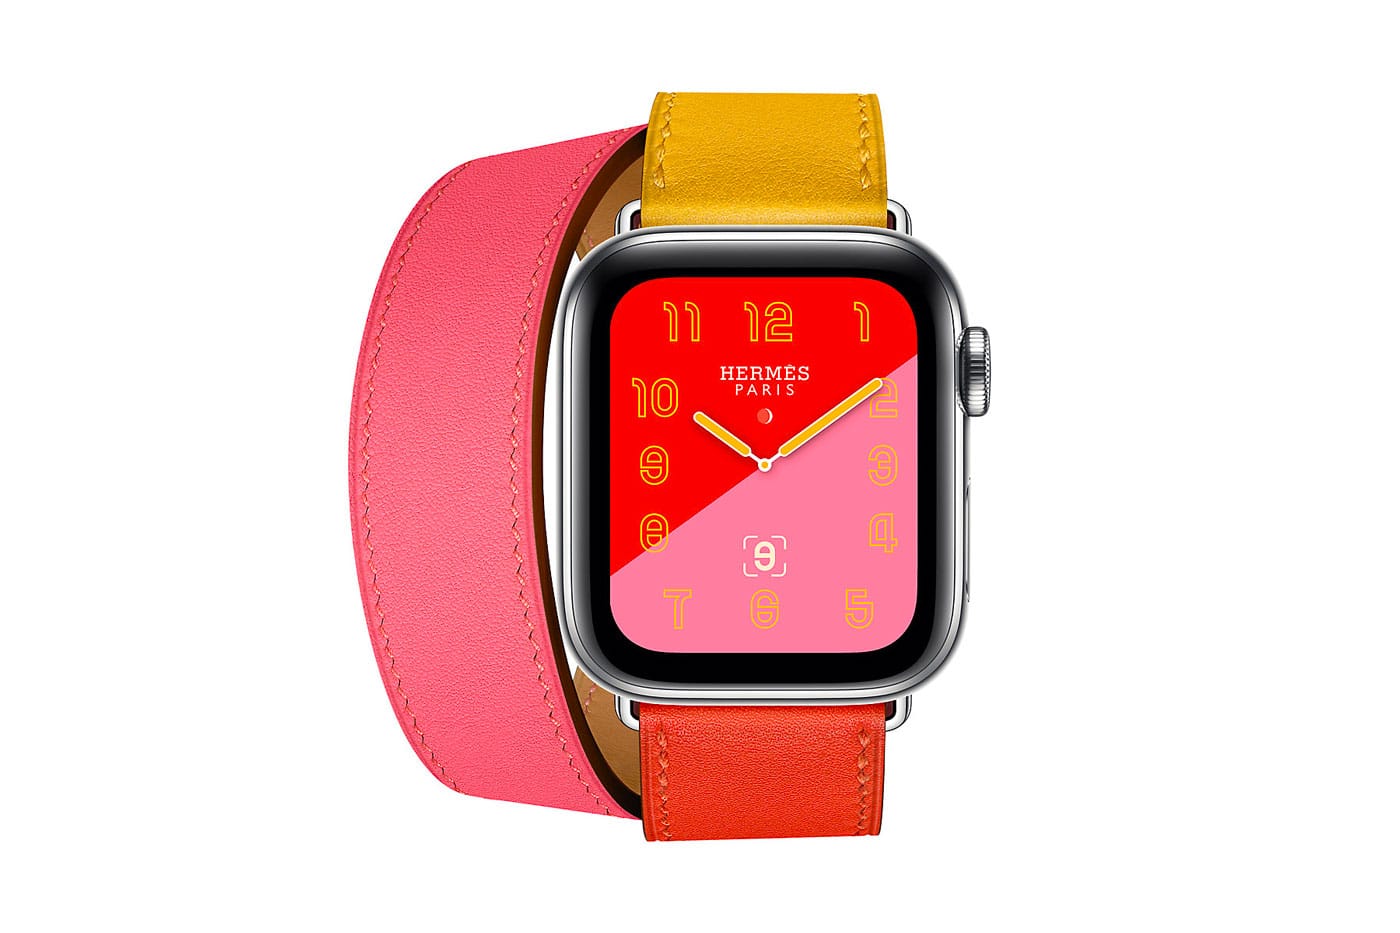 Hermès Apple Watch Series 4 Straps | HYPEBEAST